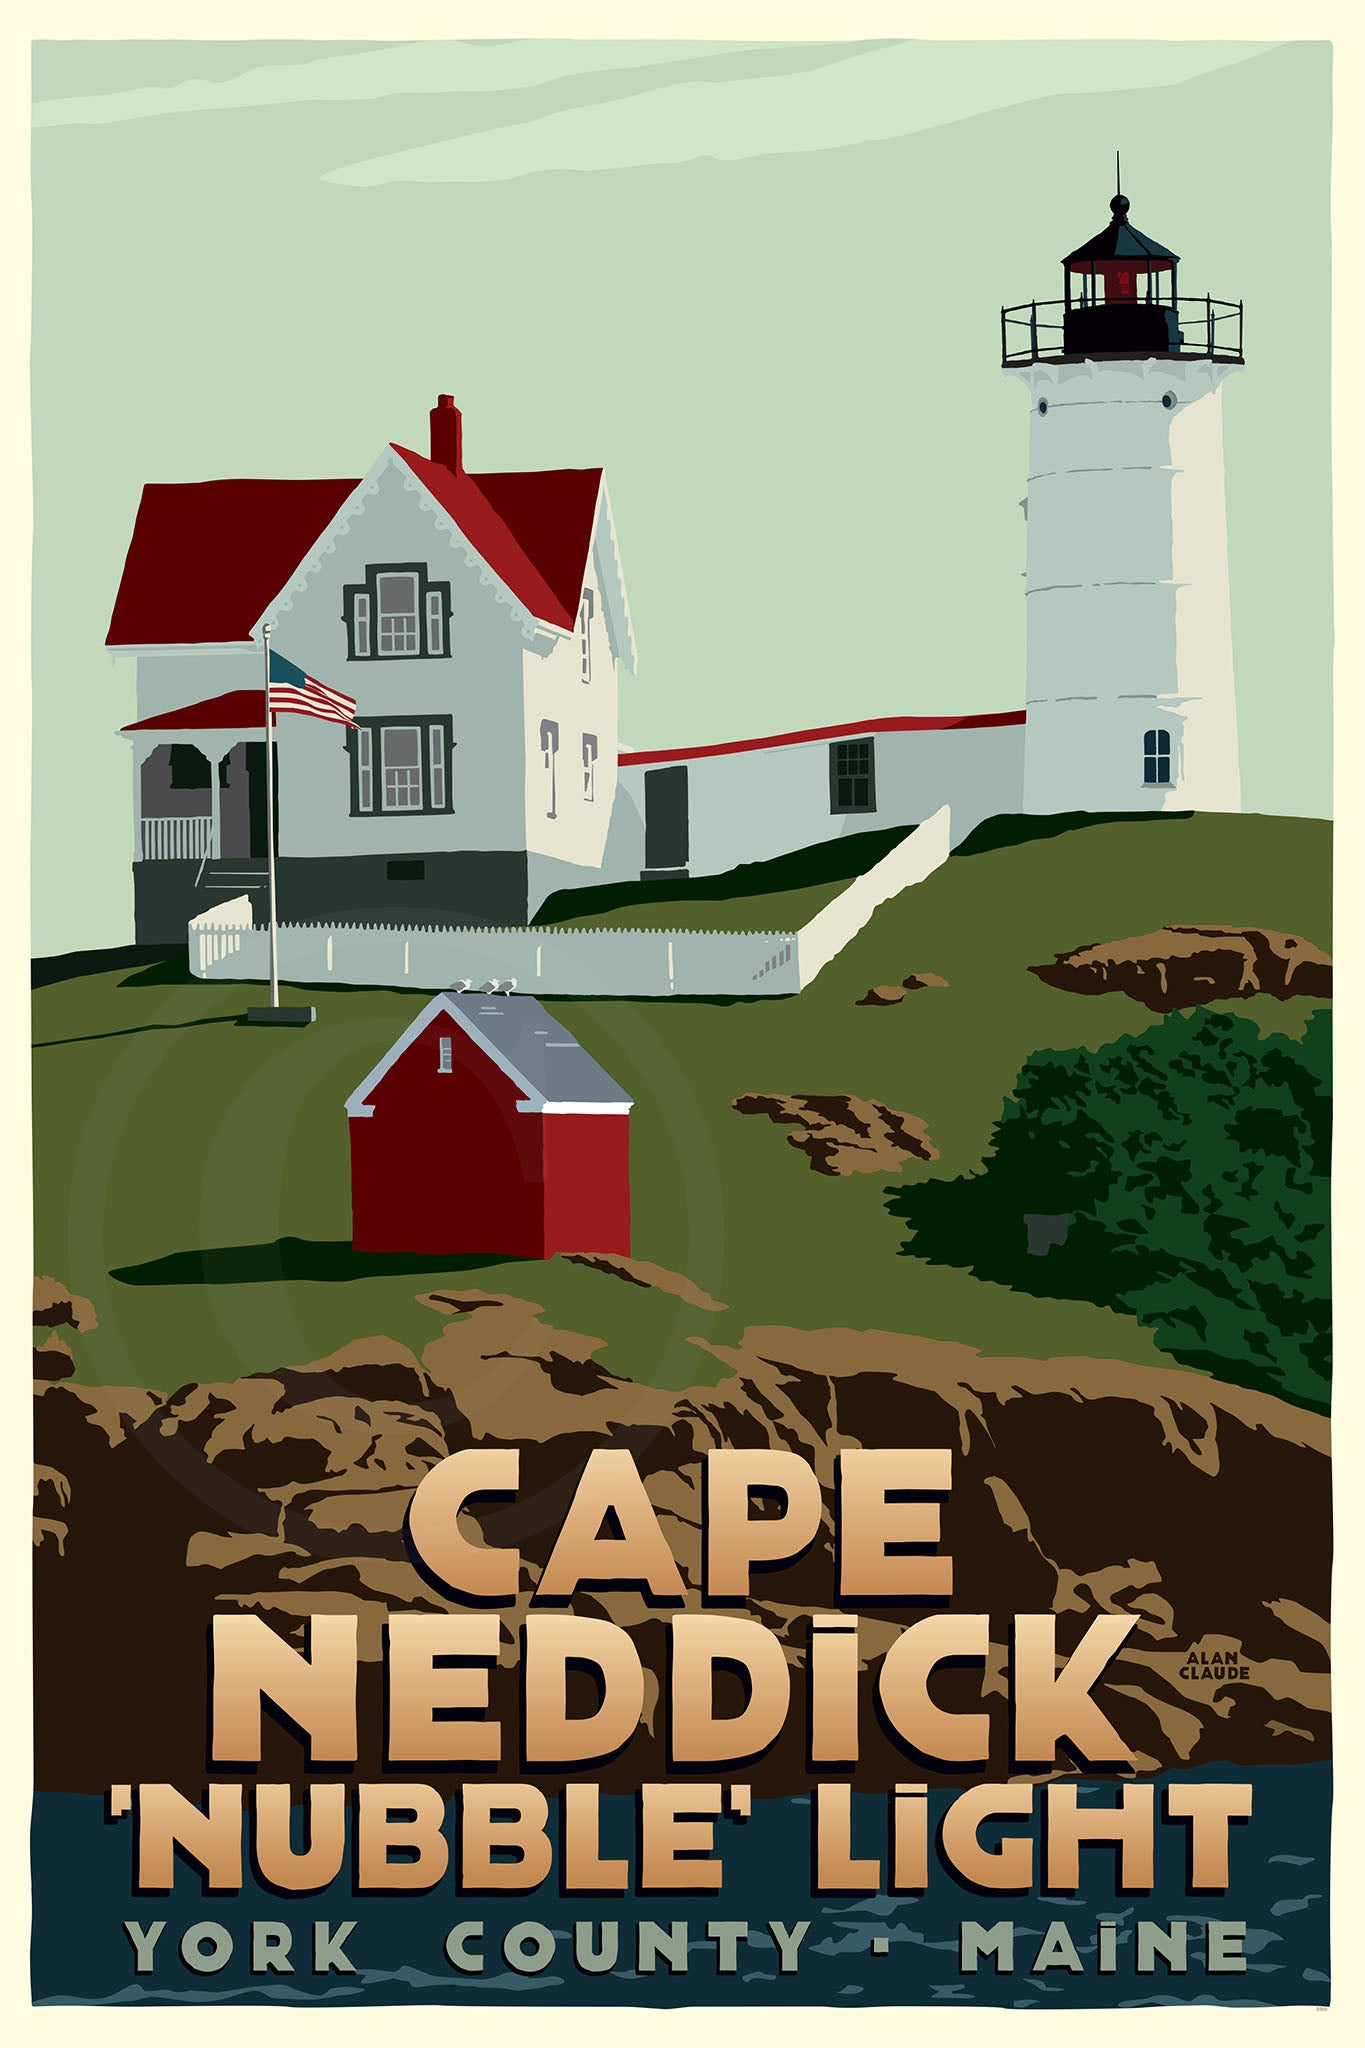 Cape Neddick Nubble Light Art Print 24" x 36" Travel Poster By Alan Claude - Maine